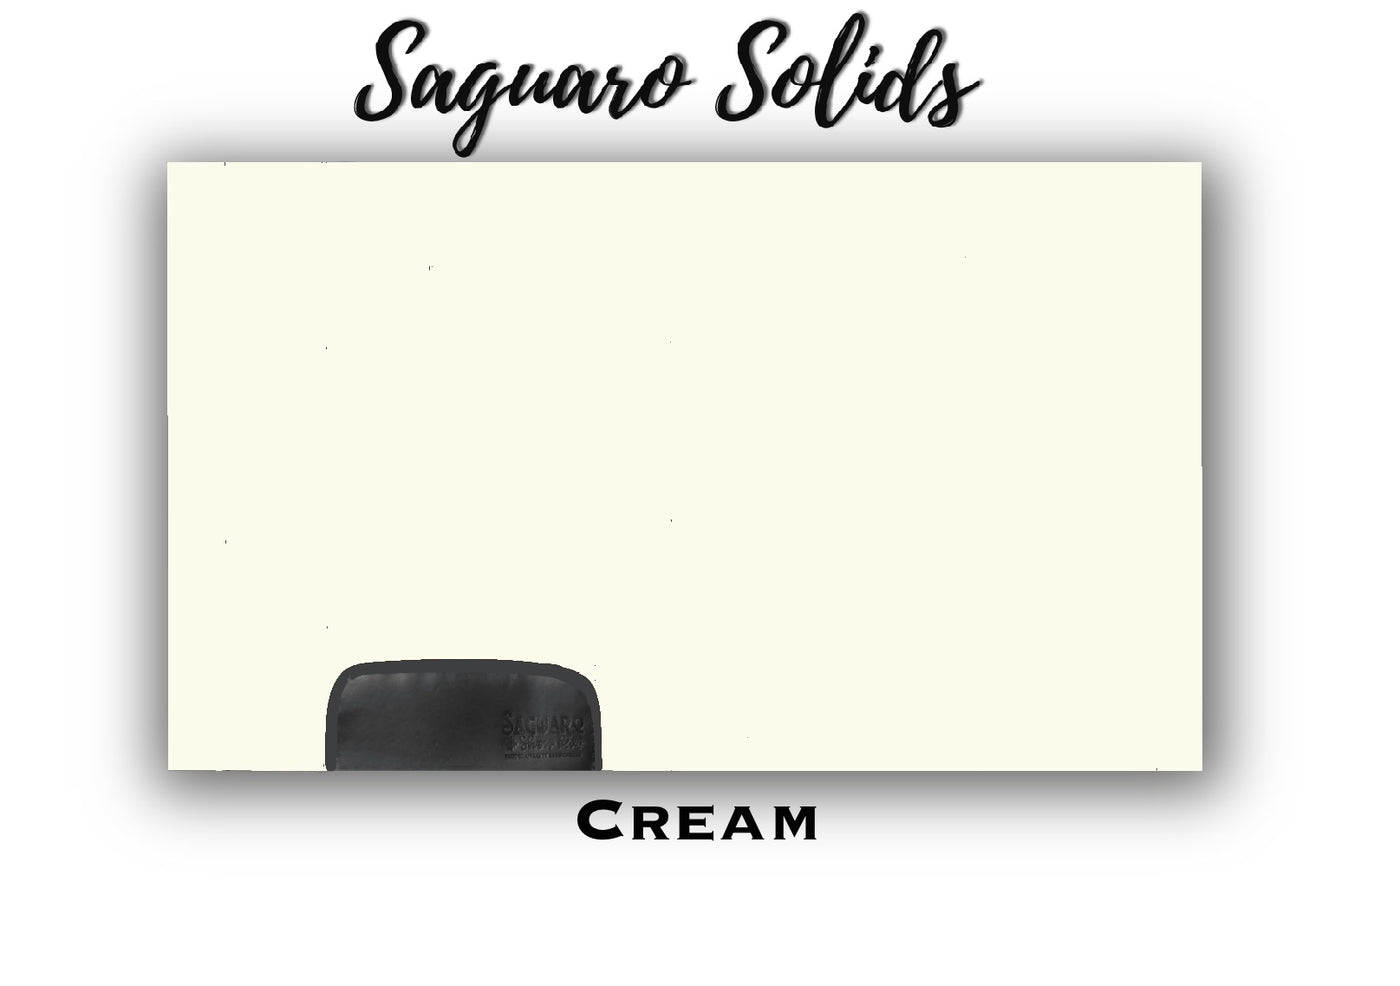 Saguaro Solid "Cream" Show Pad (SEMI-CUSTOM)